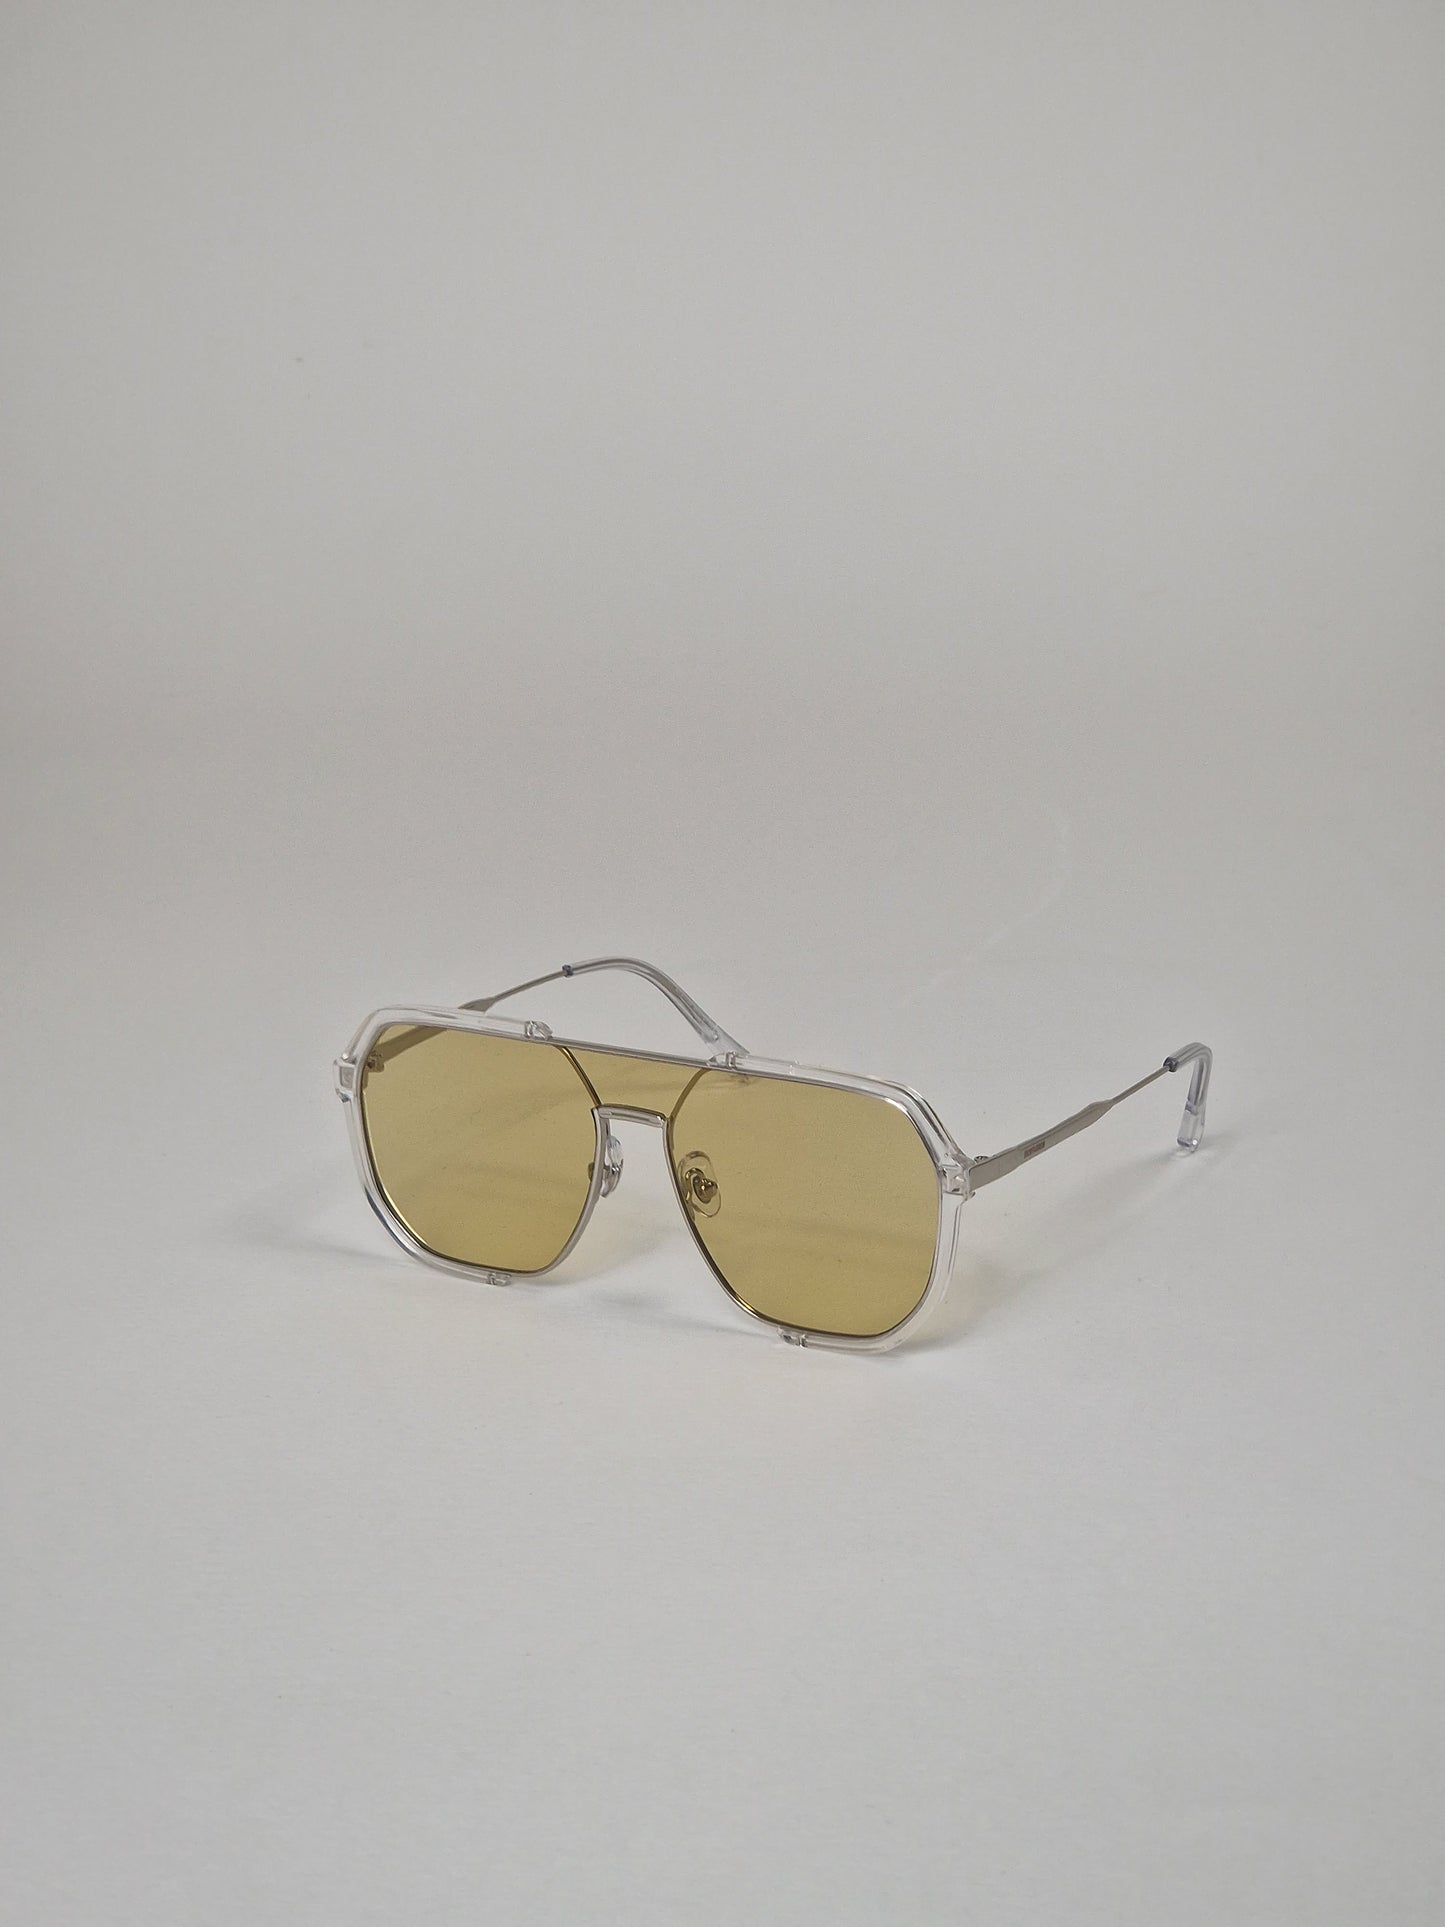 Sunglasses, model 21 - Yellow tinted.